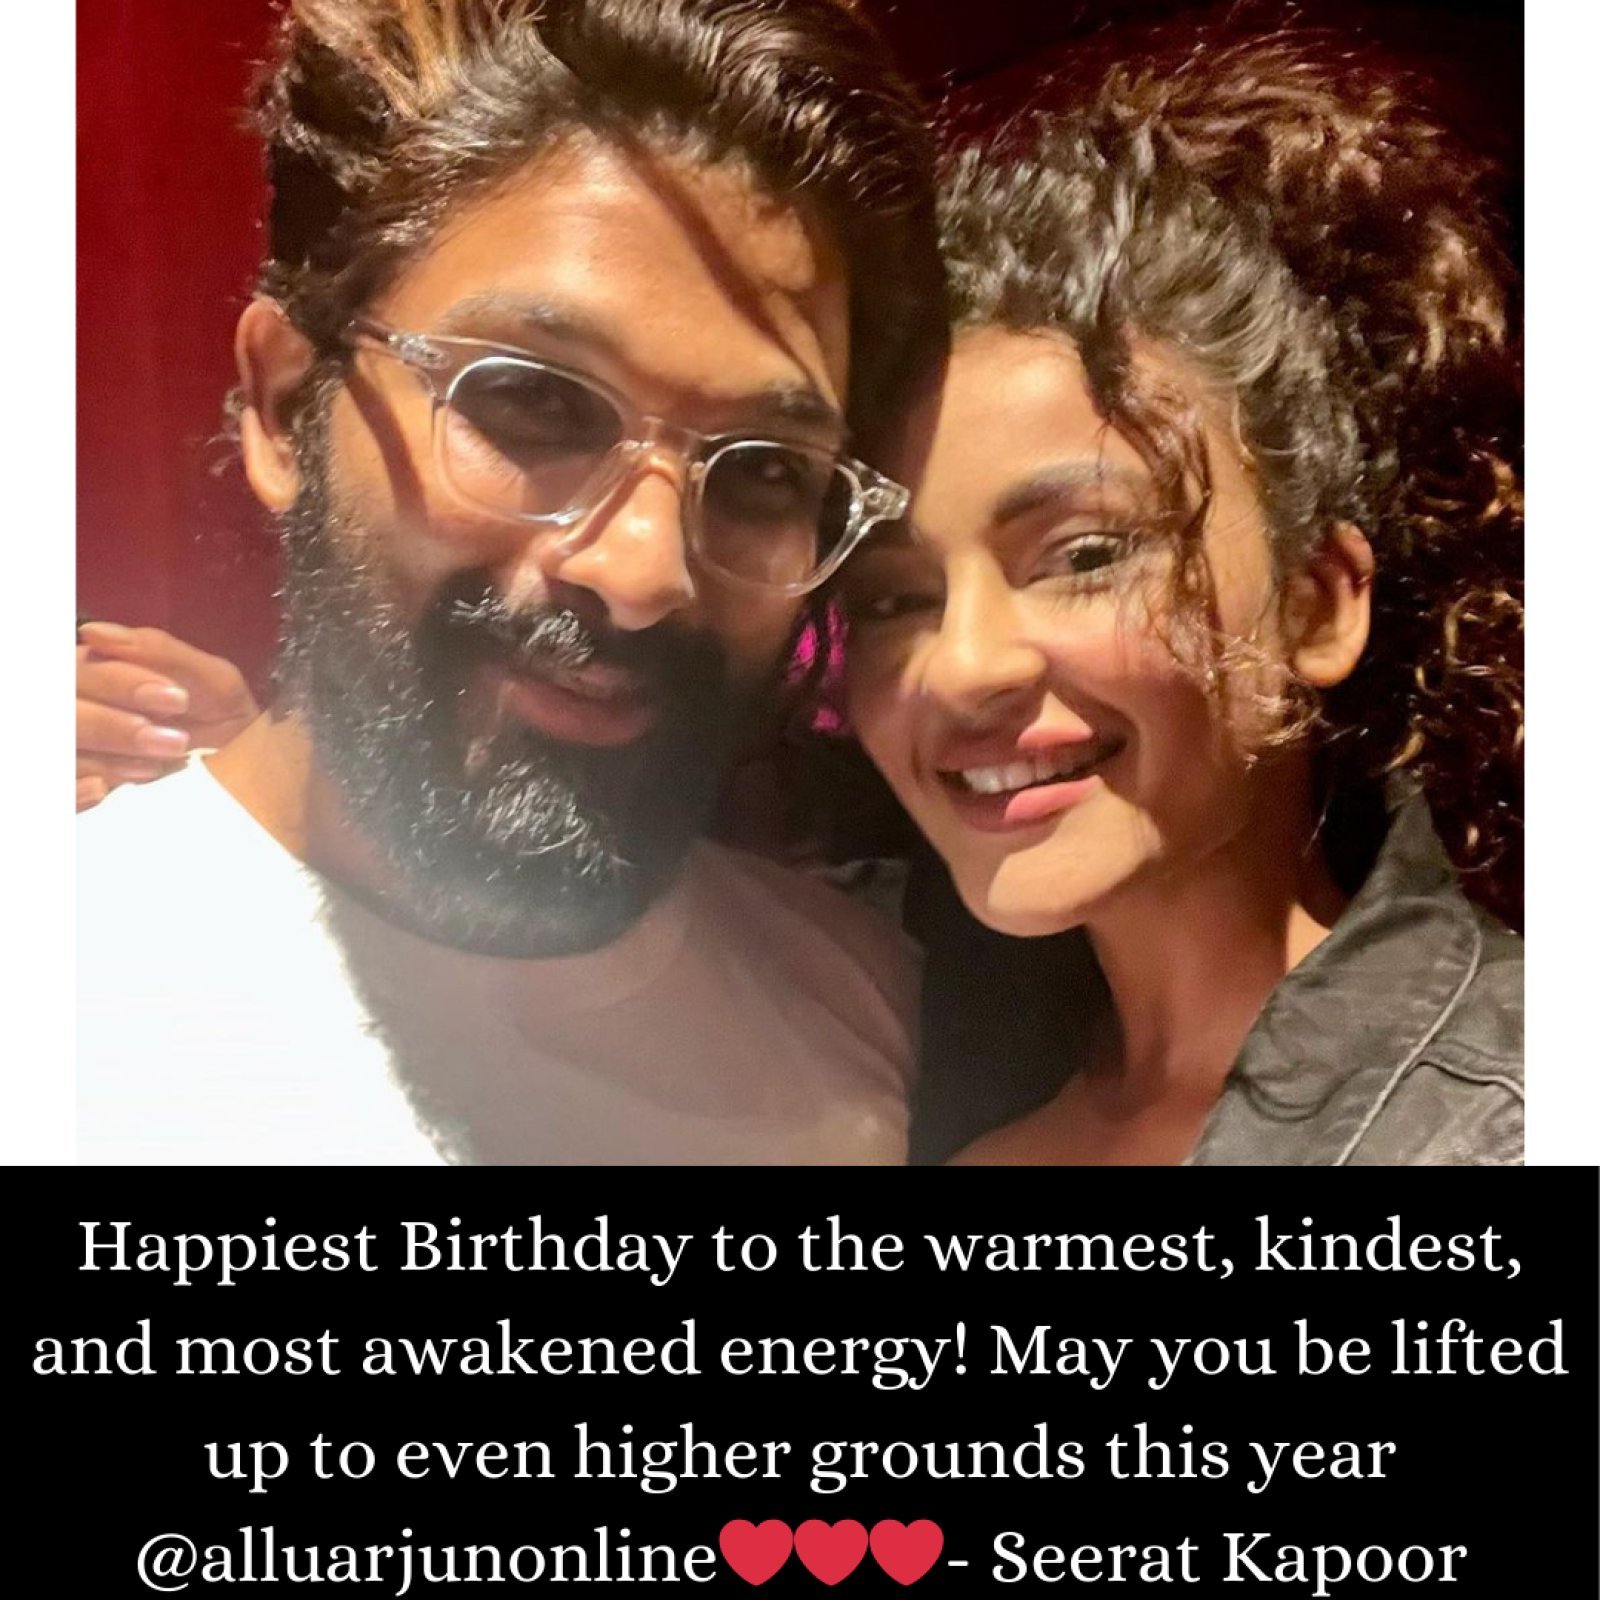 Happy Birthday Allu Arjun: Seerat Kapoor Sends Heartfelt Birthday Wishes For Dear Friend, The Megastar Allu Arjun On His 42nd Birthday